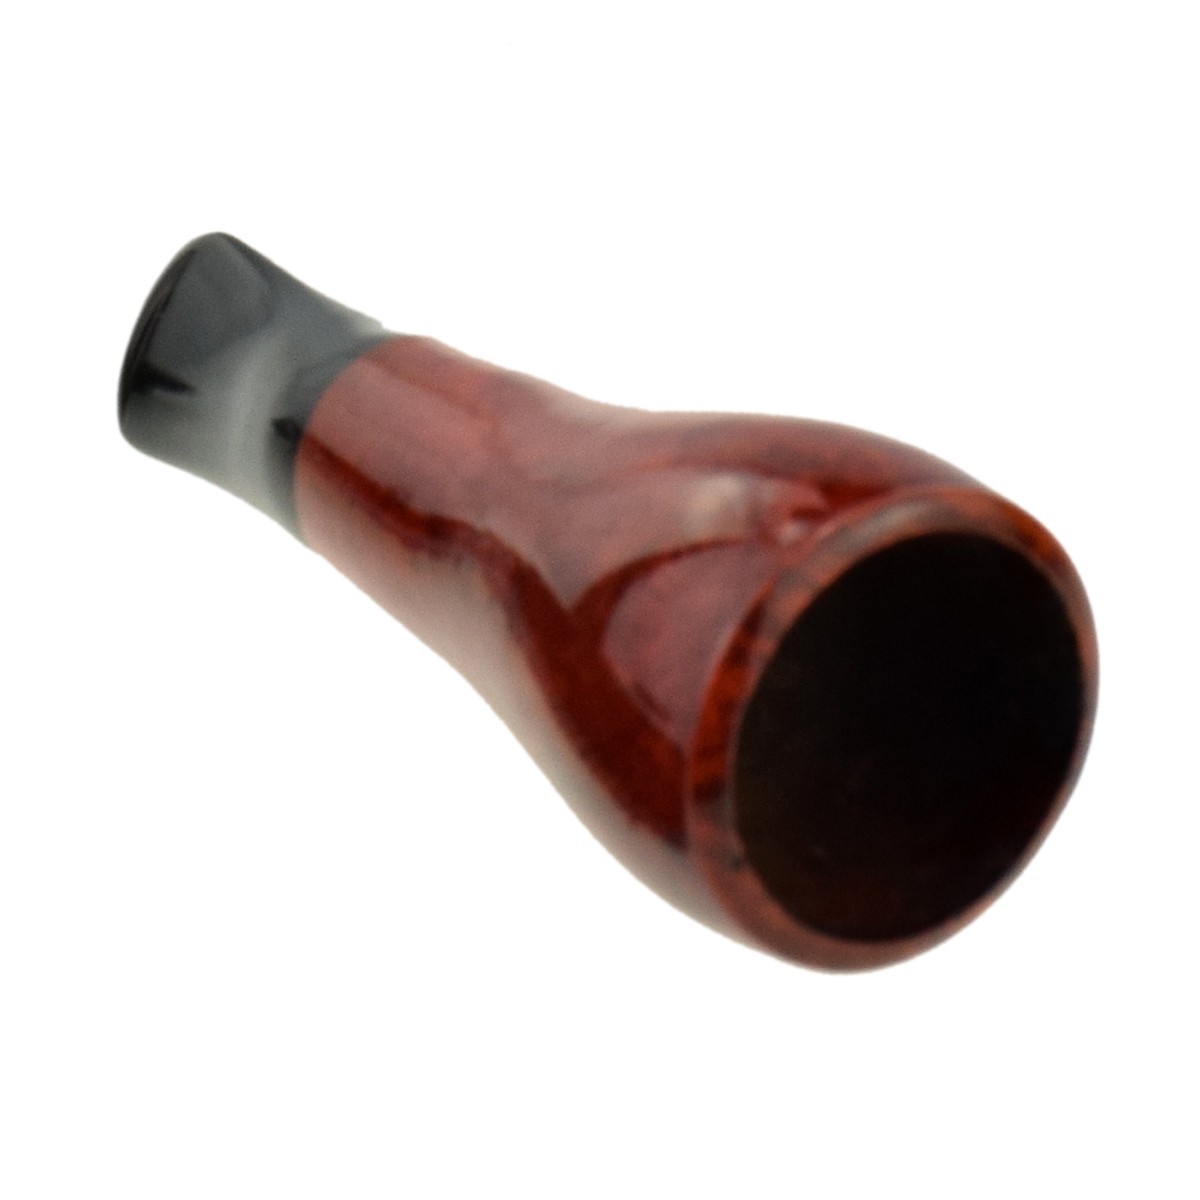 56 Gauge Lucienne Wooden Cigar Holder with 9mm Charcoal Filter 